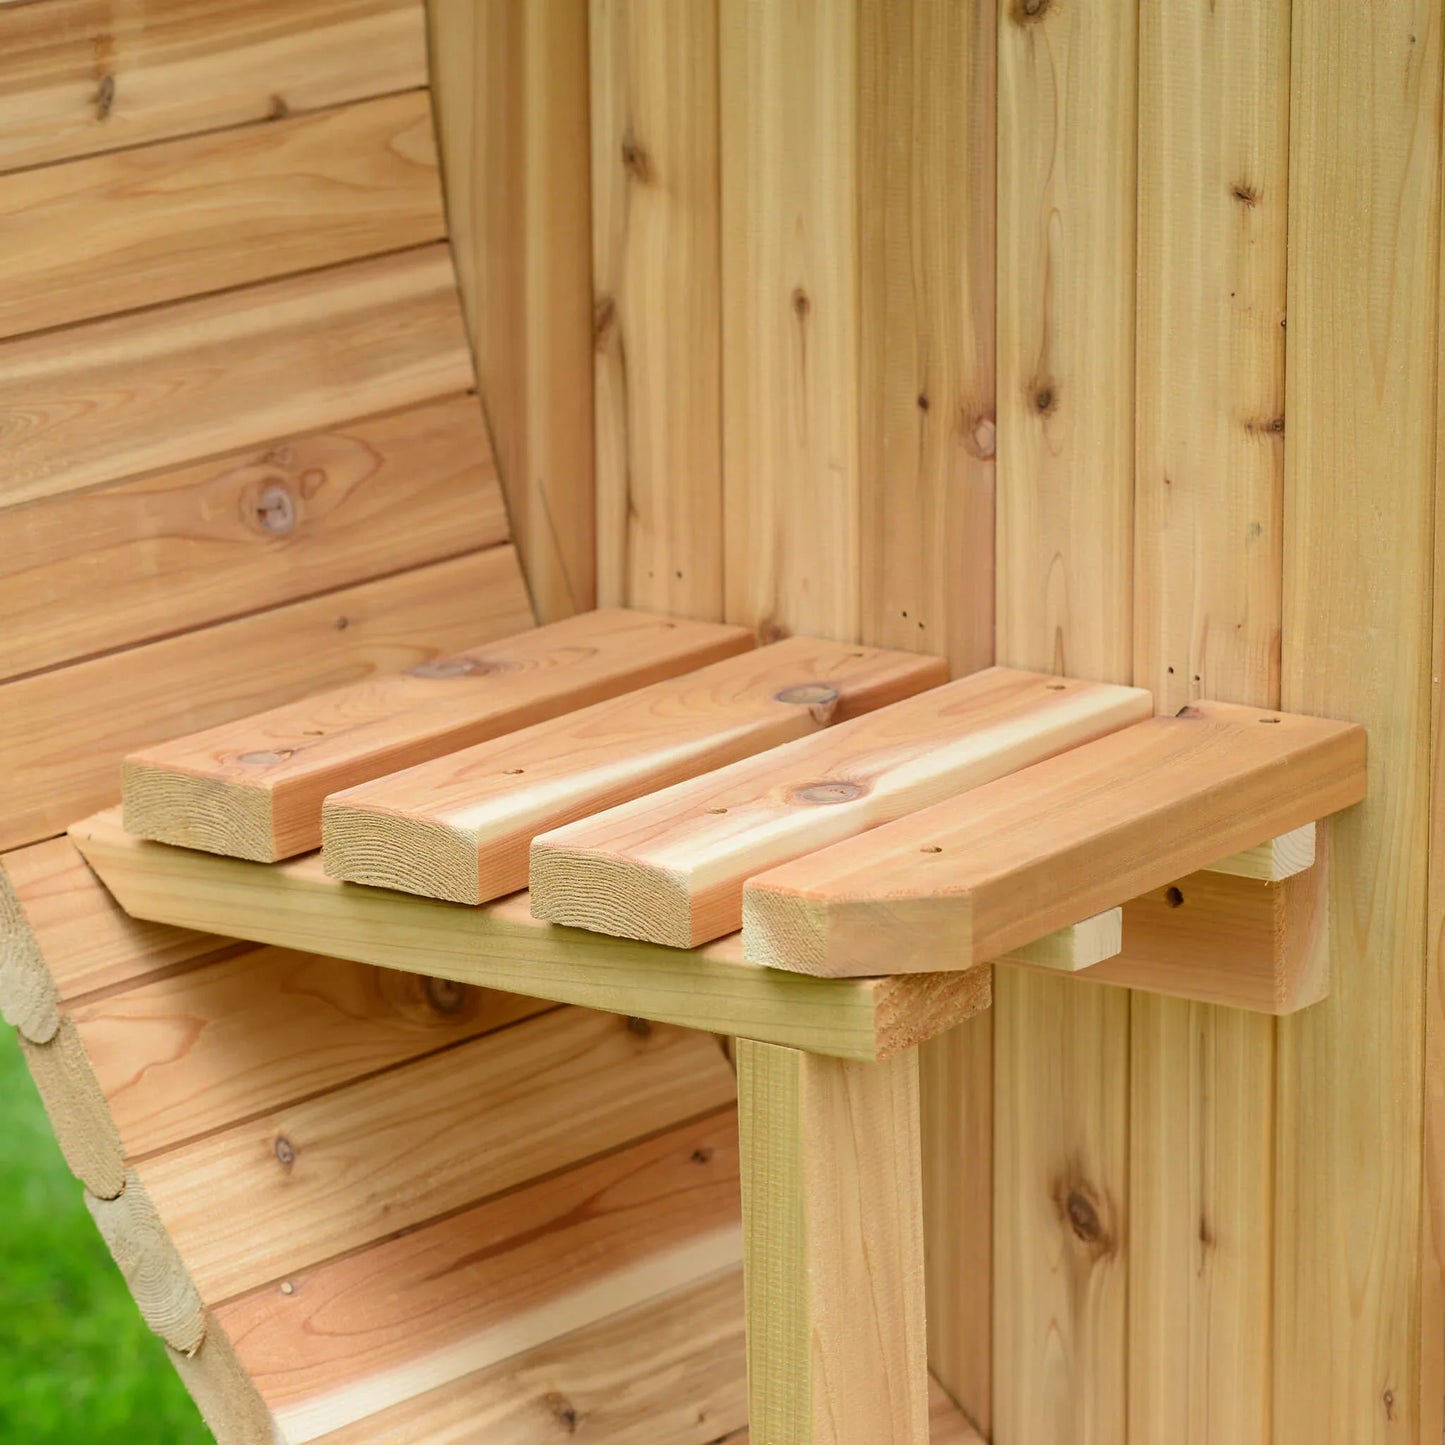 almost heaven saunas-wood barrel- barrel sauna- rustic cedar-outdoor sauna-audra-2 person-4 person-barrel detail audra bench